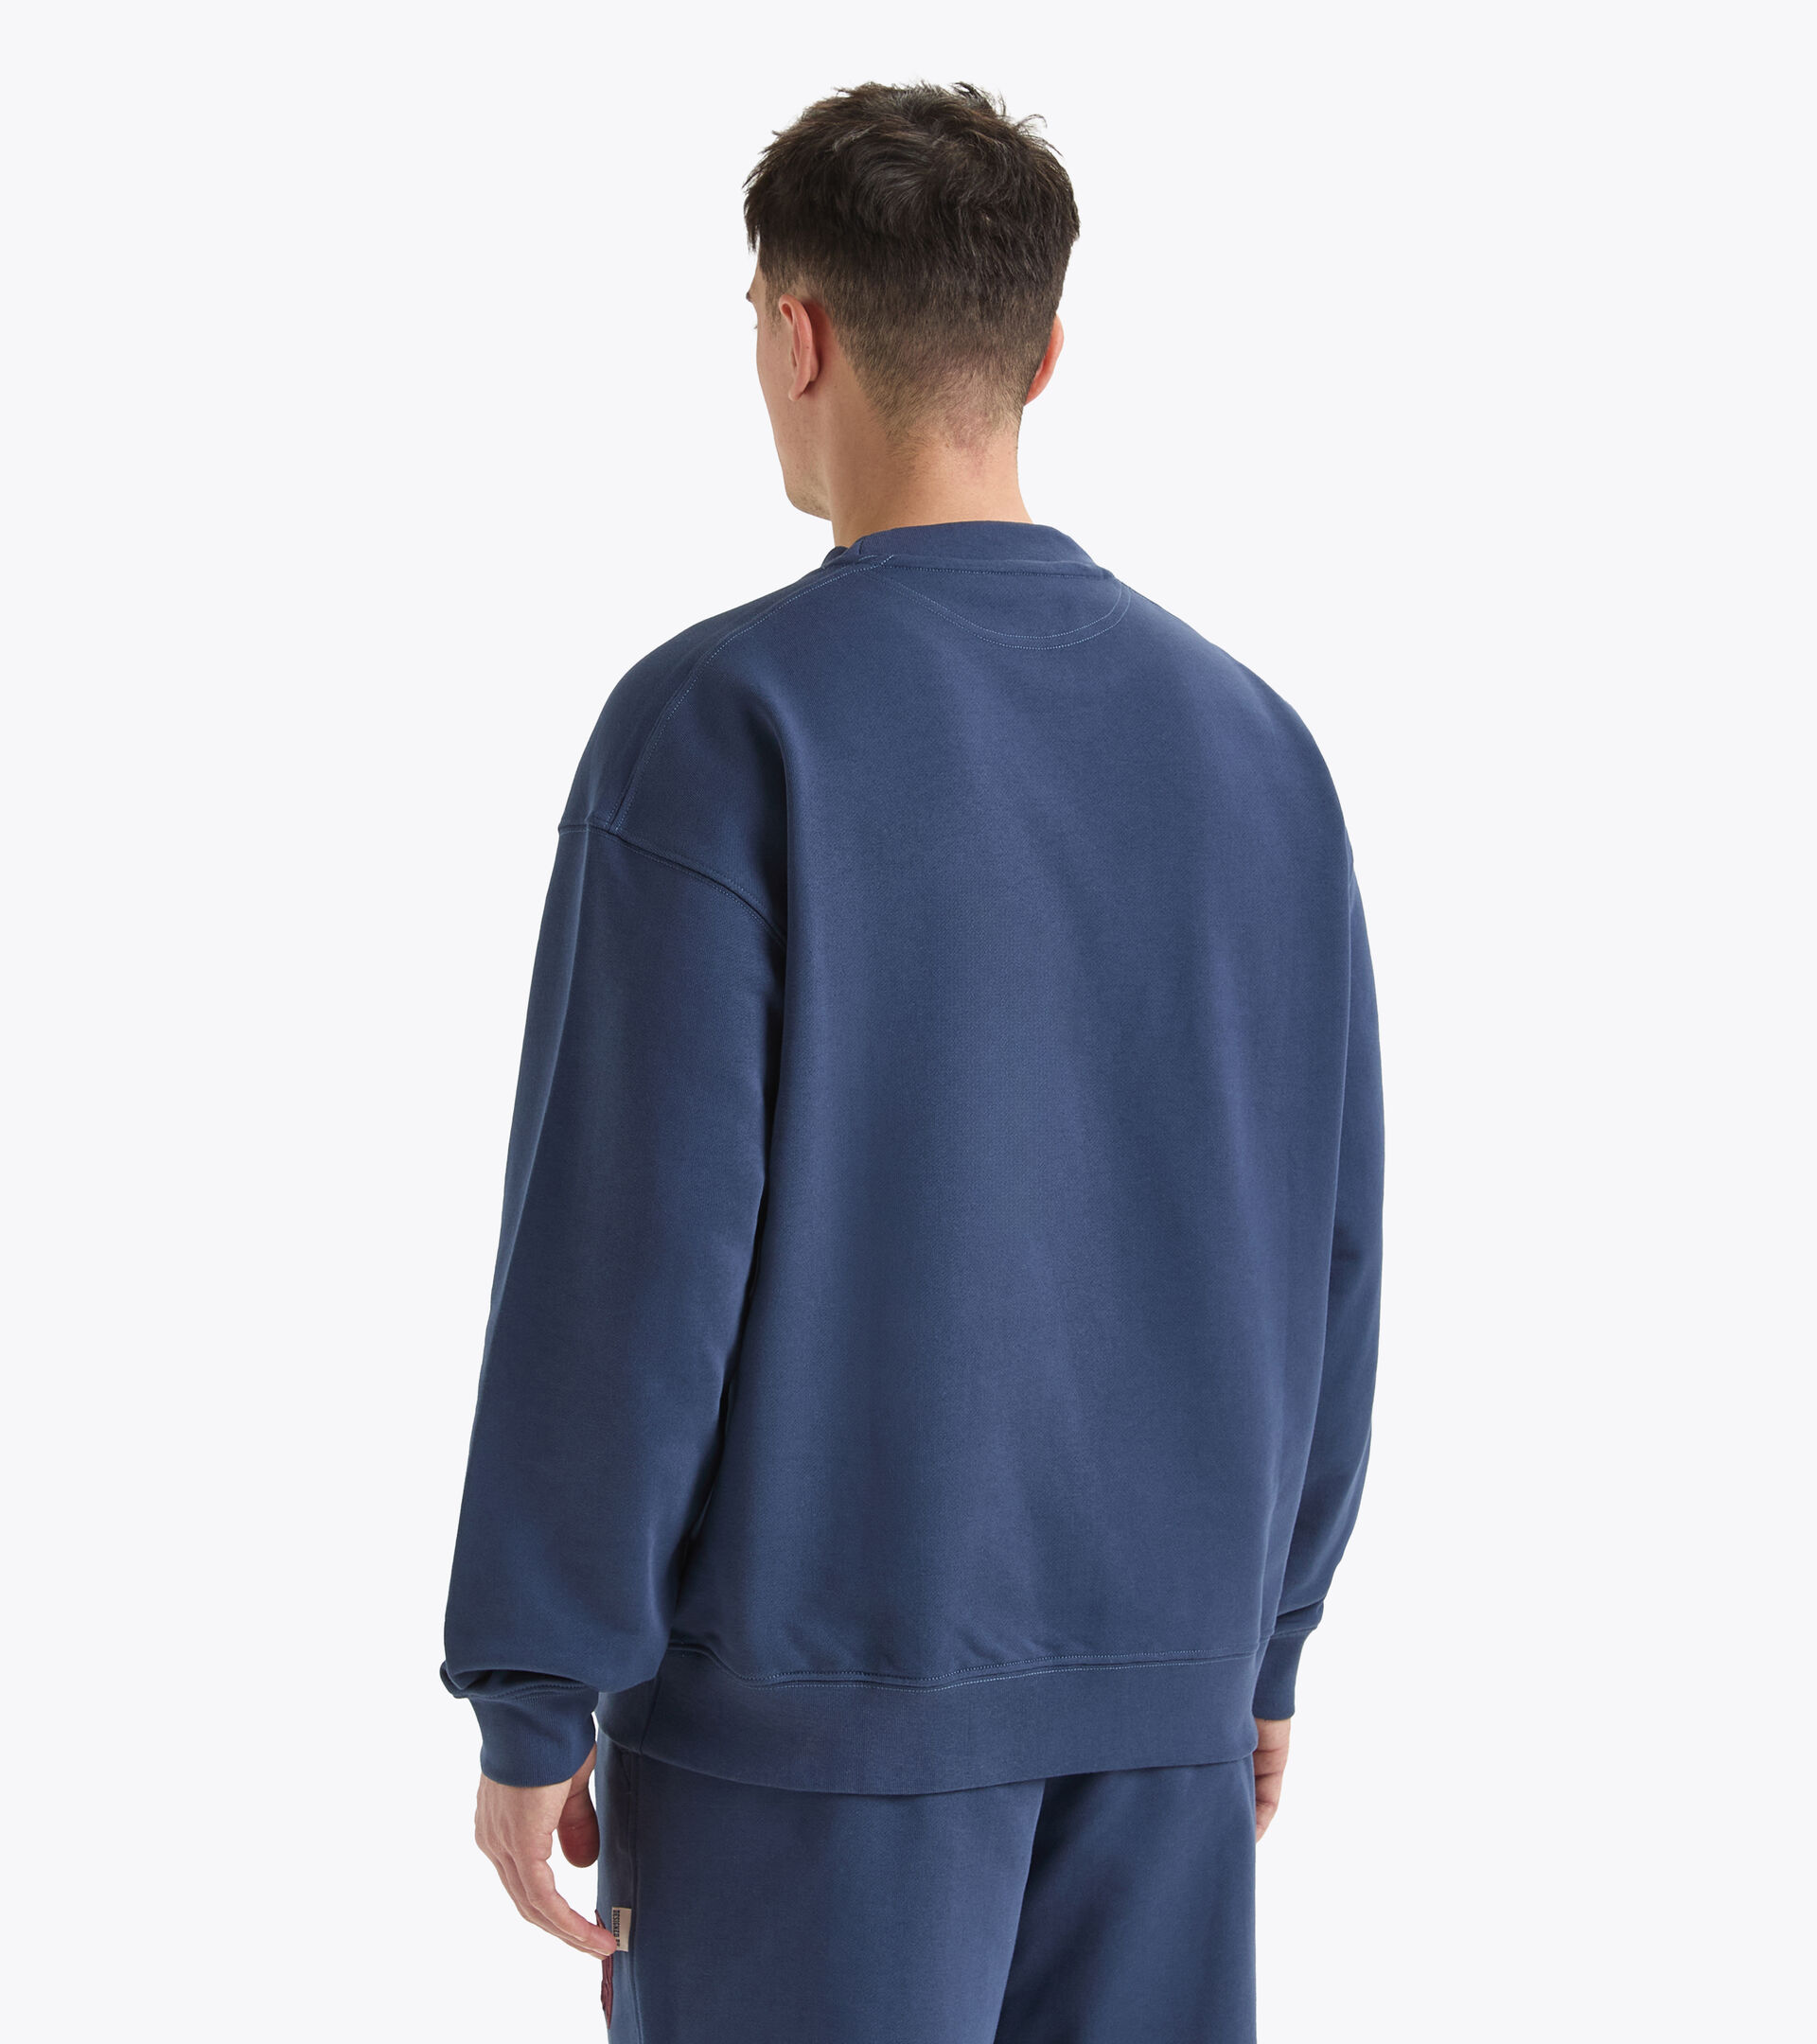 Crewneck sweatshirt - Made in italy - Gender Neutral SWEATSHIRT CREW LEGACY OCEANA - Diadora